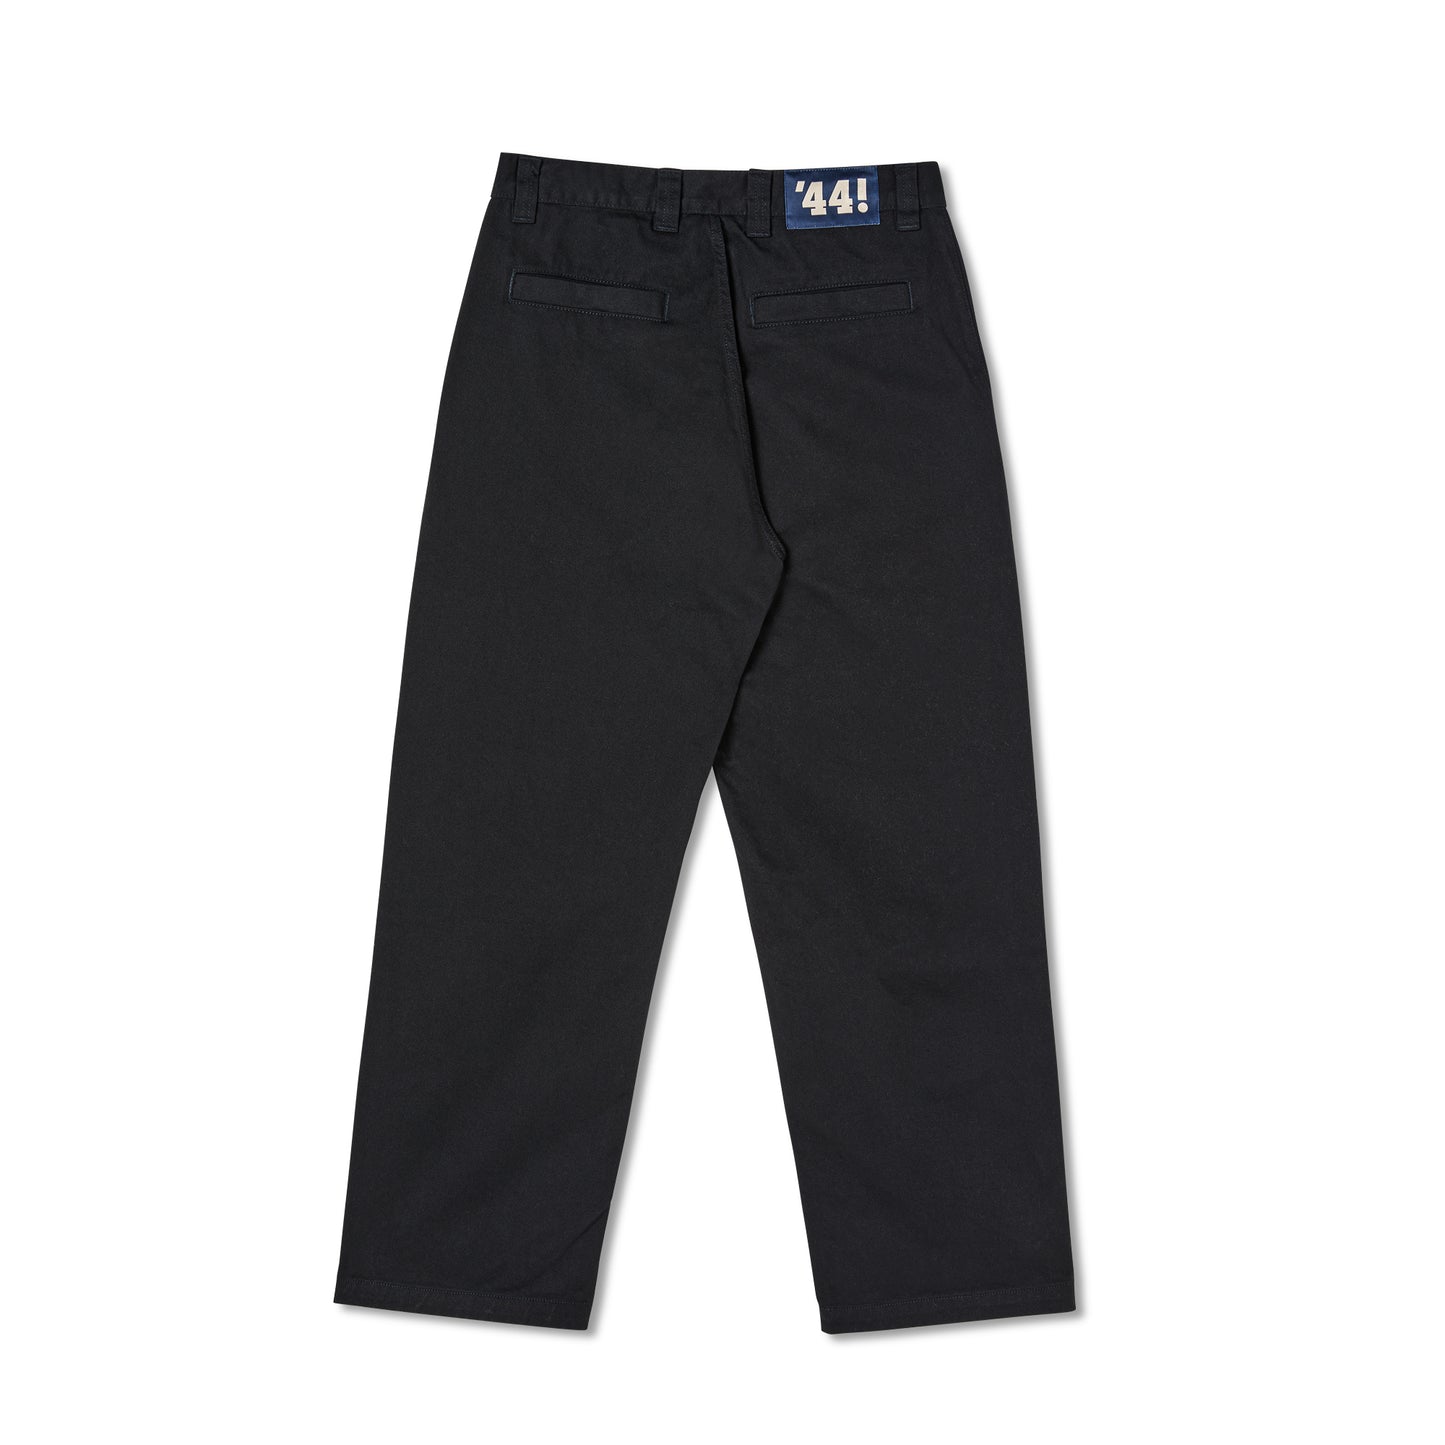 Polar 44 Pants Black